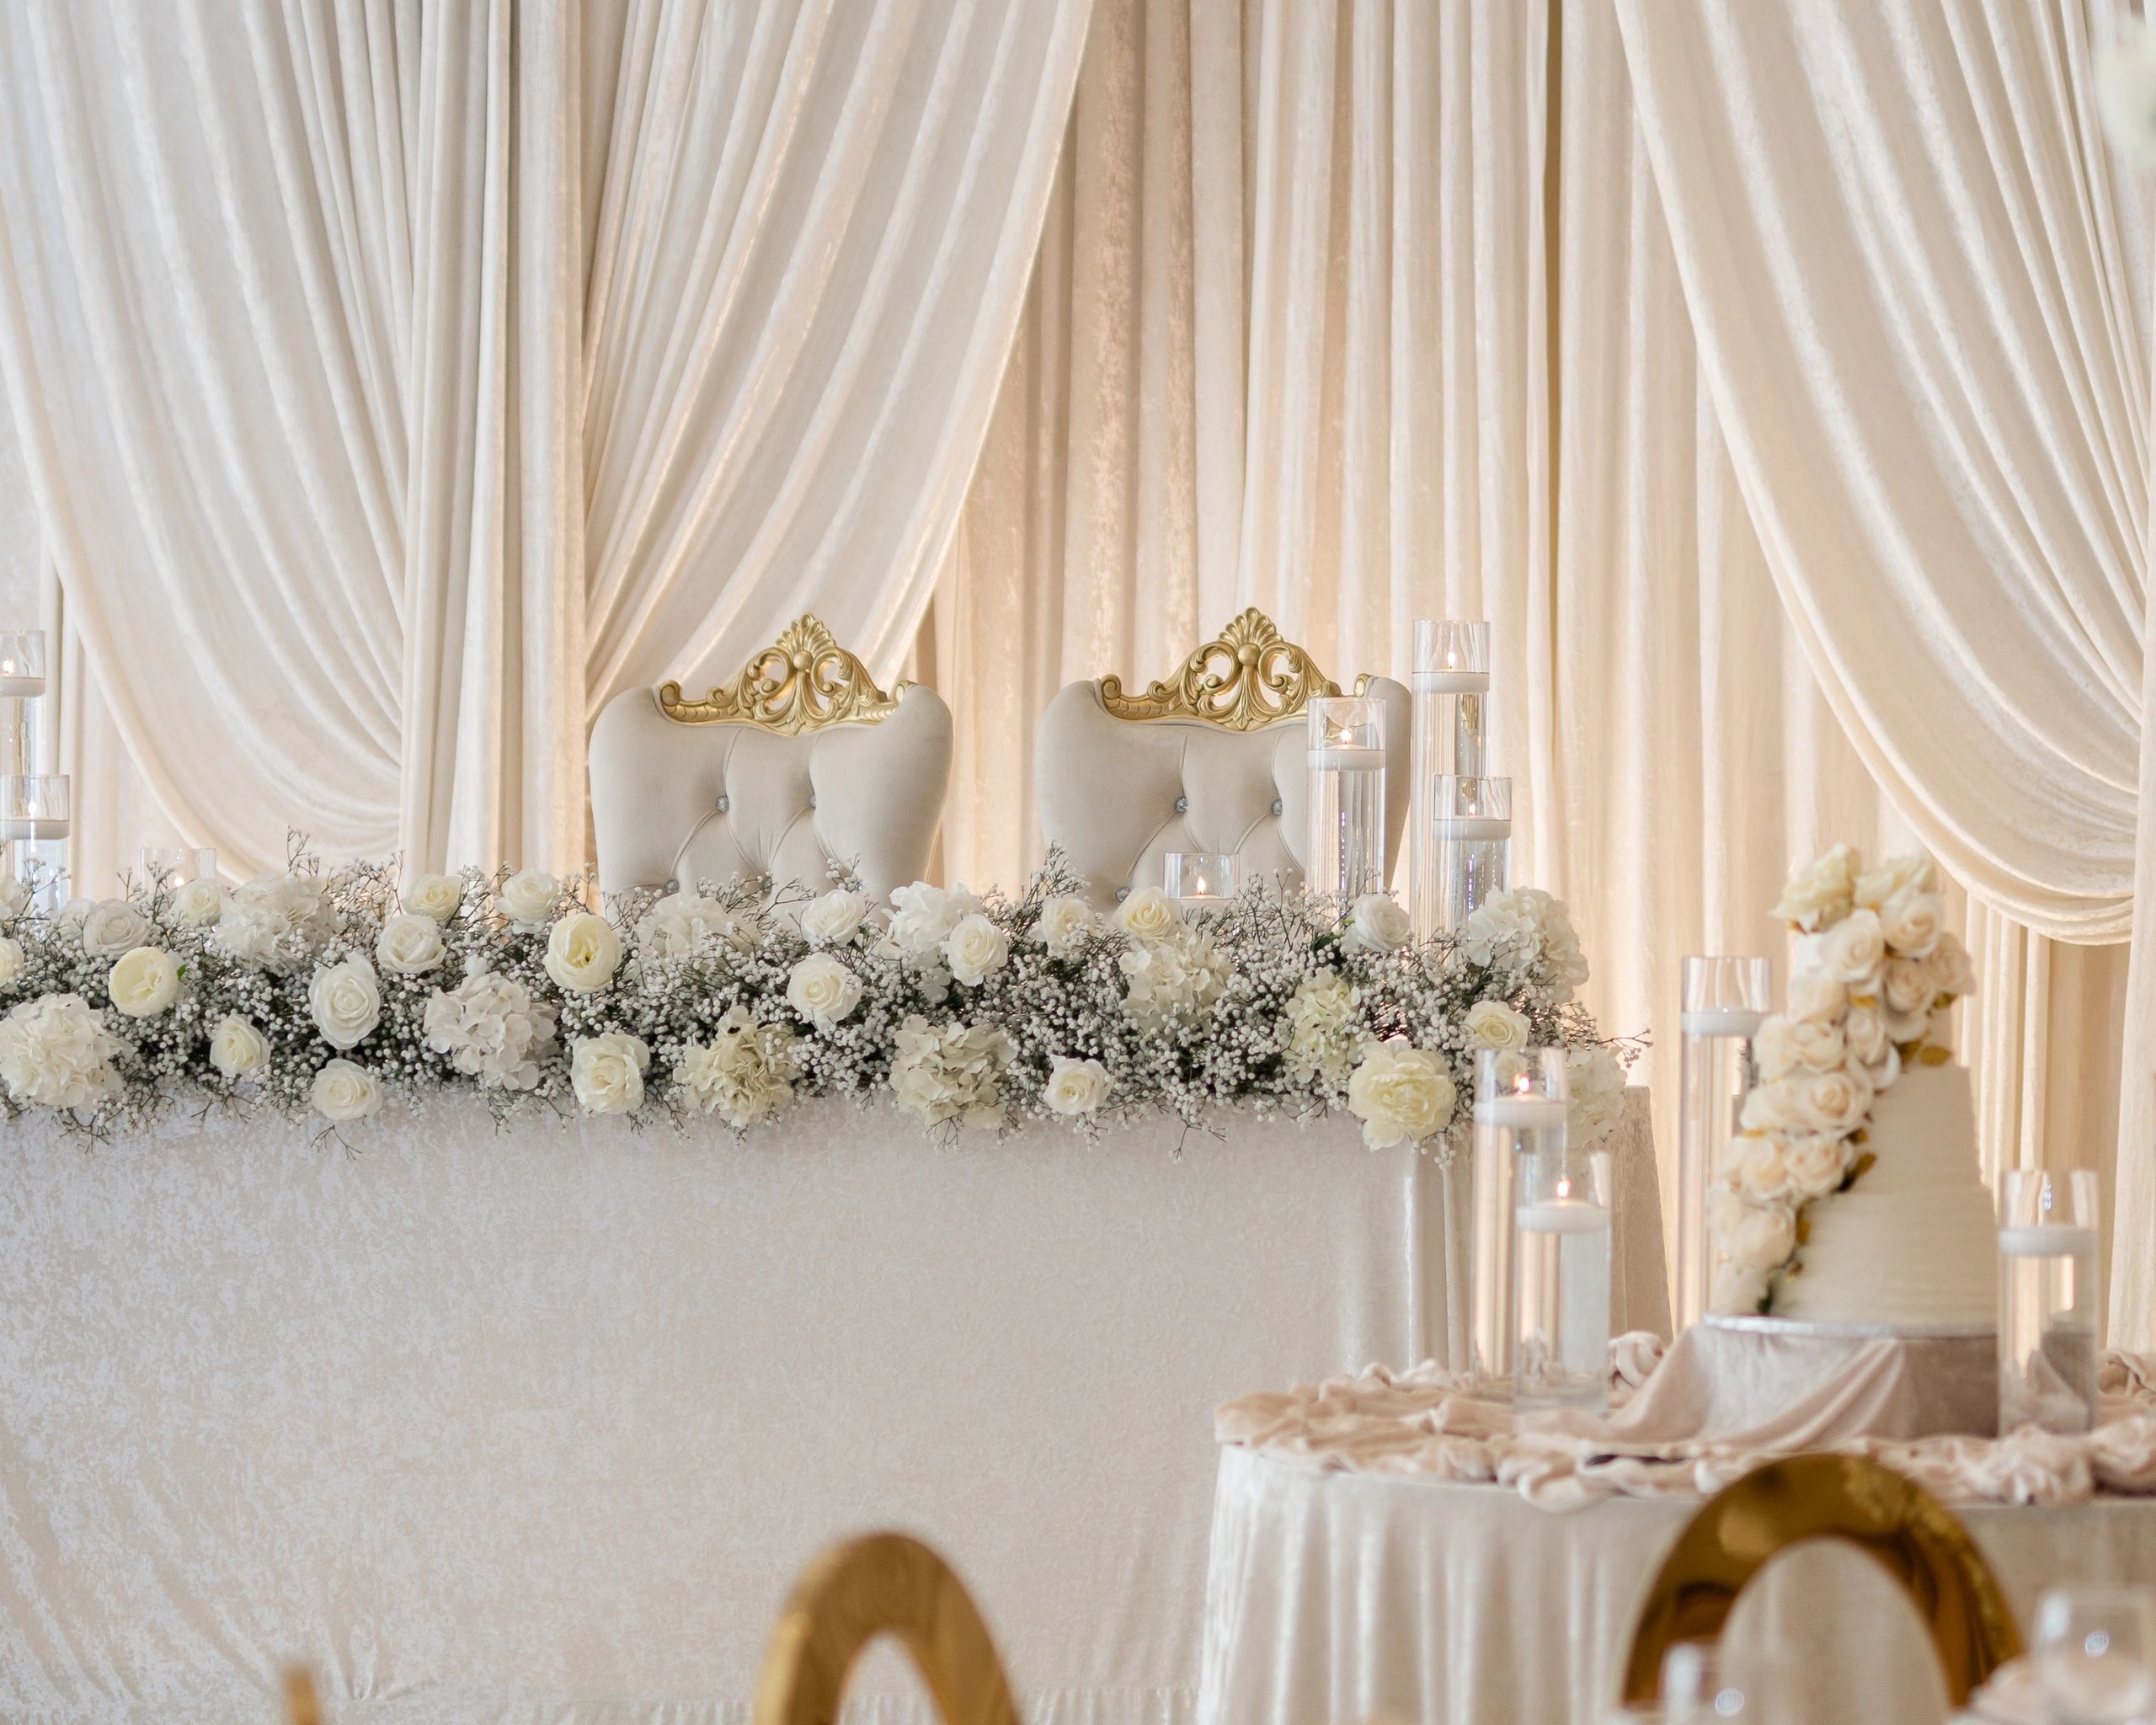 throne chair windsor, wedding chair rentals, windsor wedding decor, wedding decor windsor, wedding r